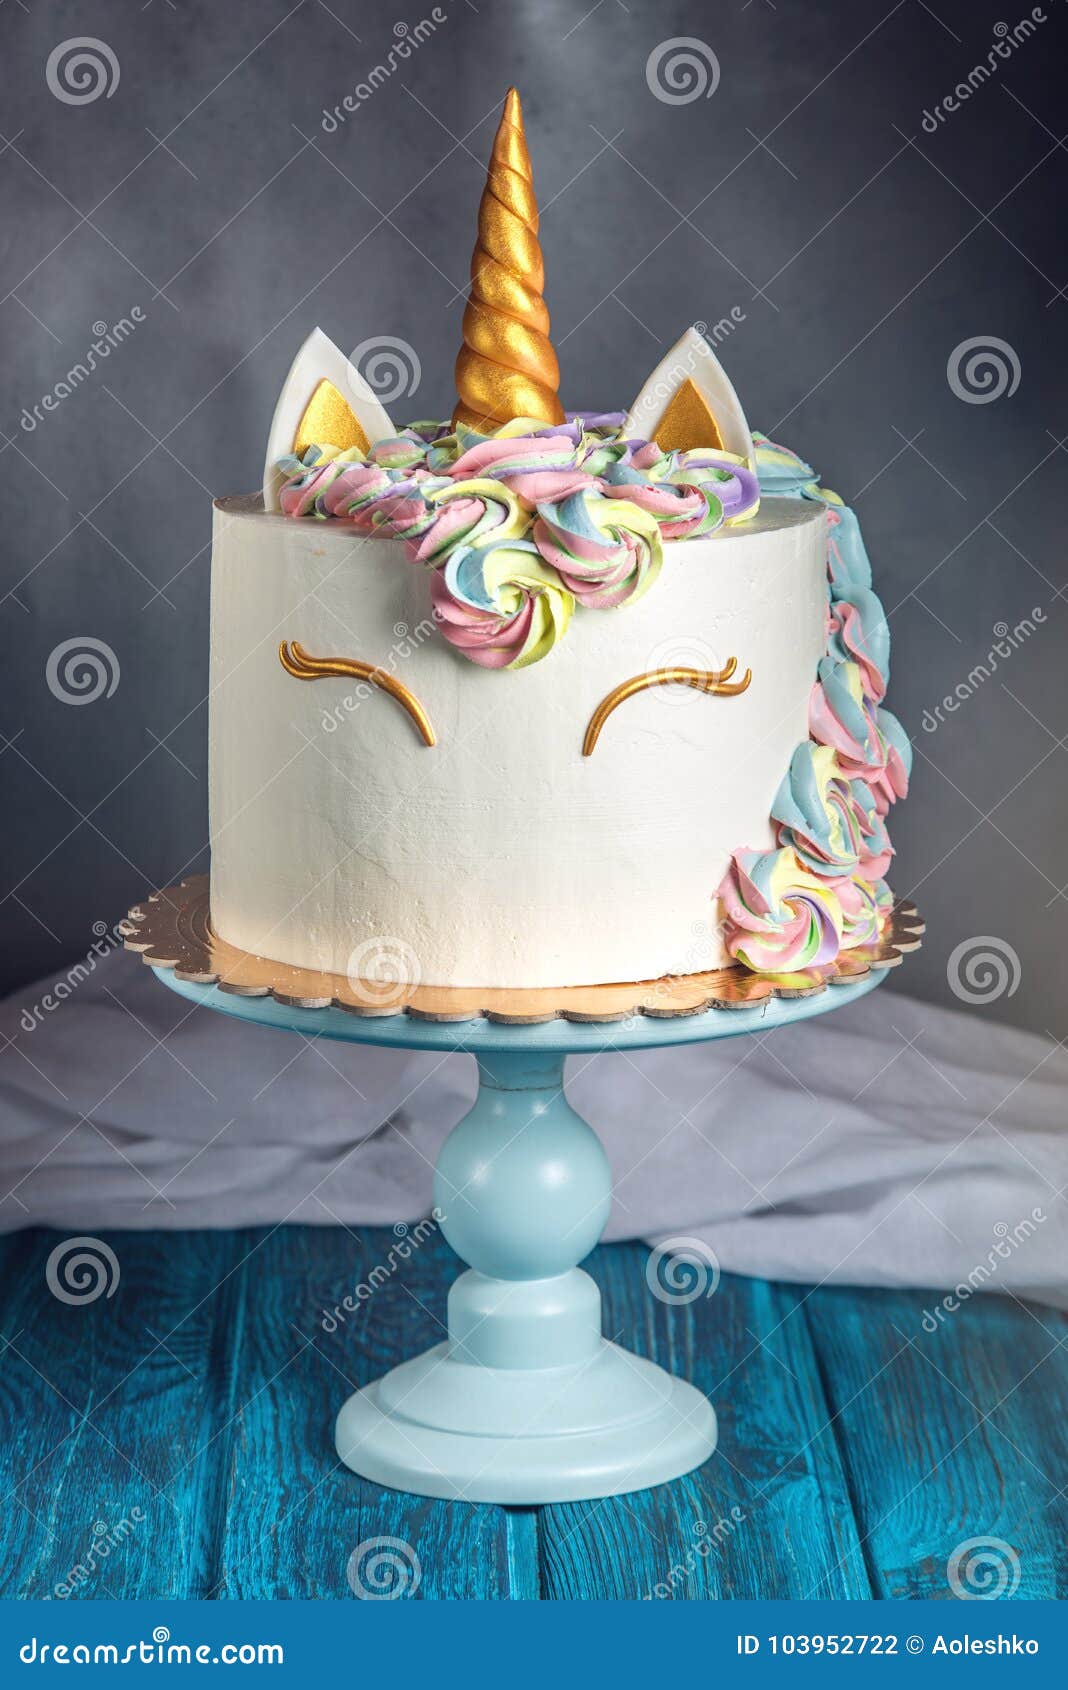 D3cr3t Happy Birthday Fantasy Cake 141cf2af-256d-4 by MAIDArt on DeviantArt